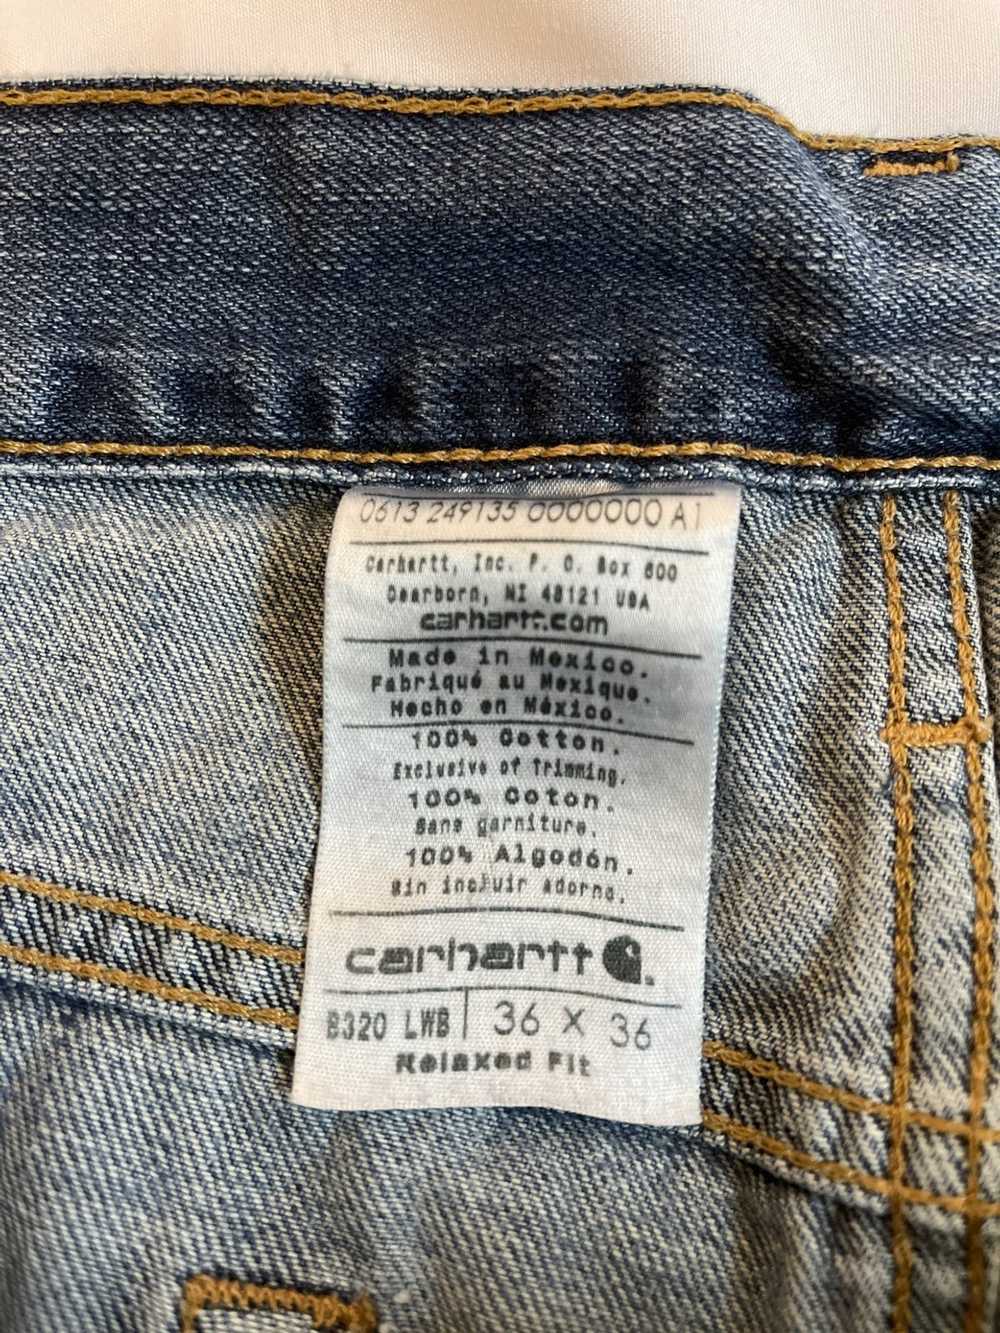 Carhartt × Vintage Vintage Carhartt Jeans - image 5